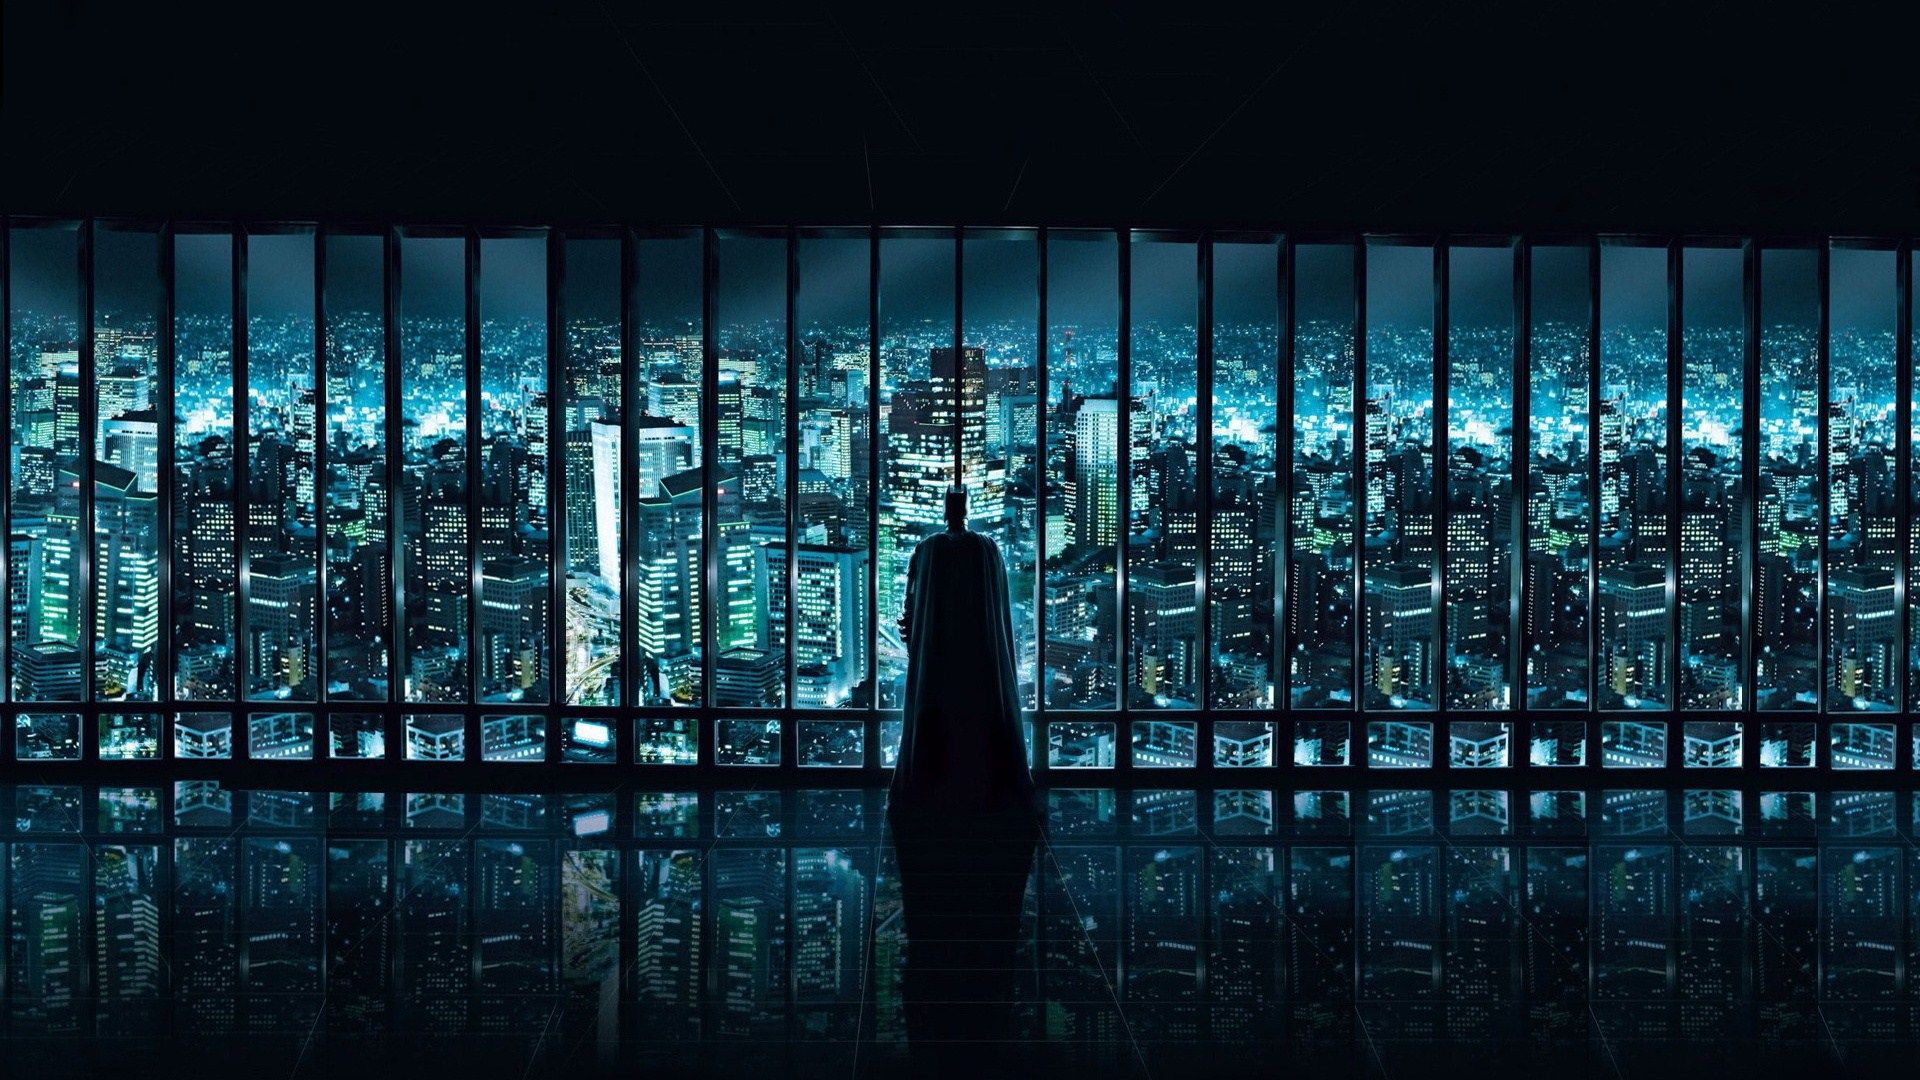 Batman HD Wallpapers Batman Images Free Cool Backgrounds